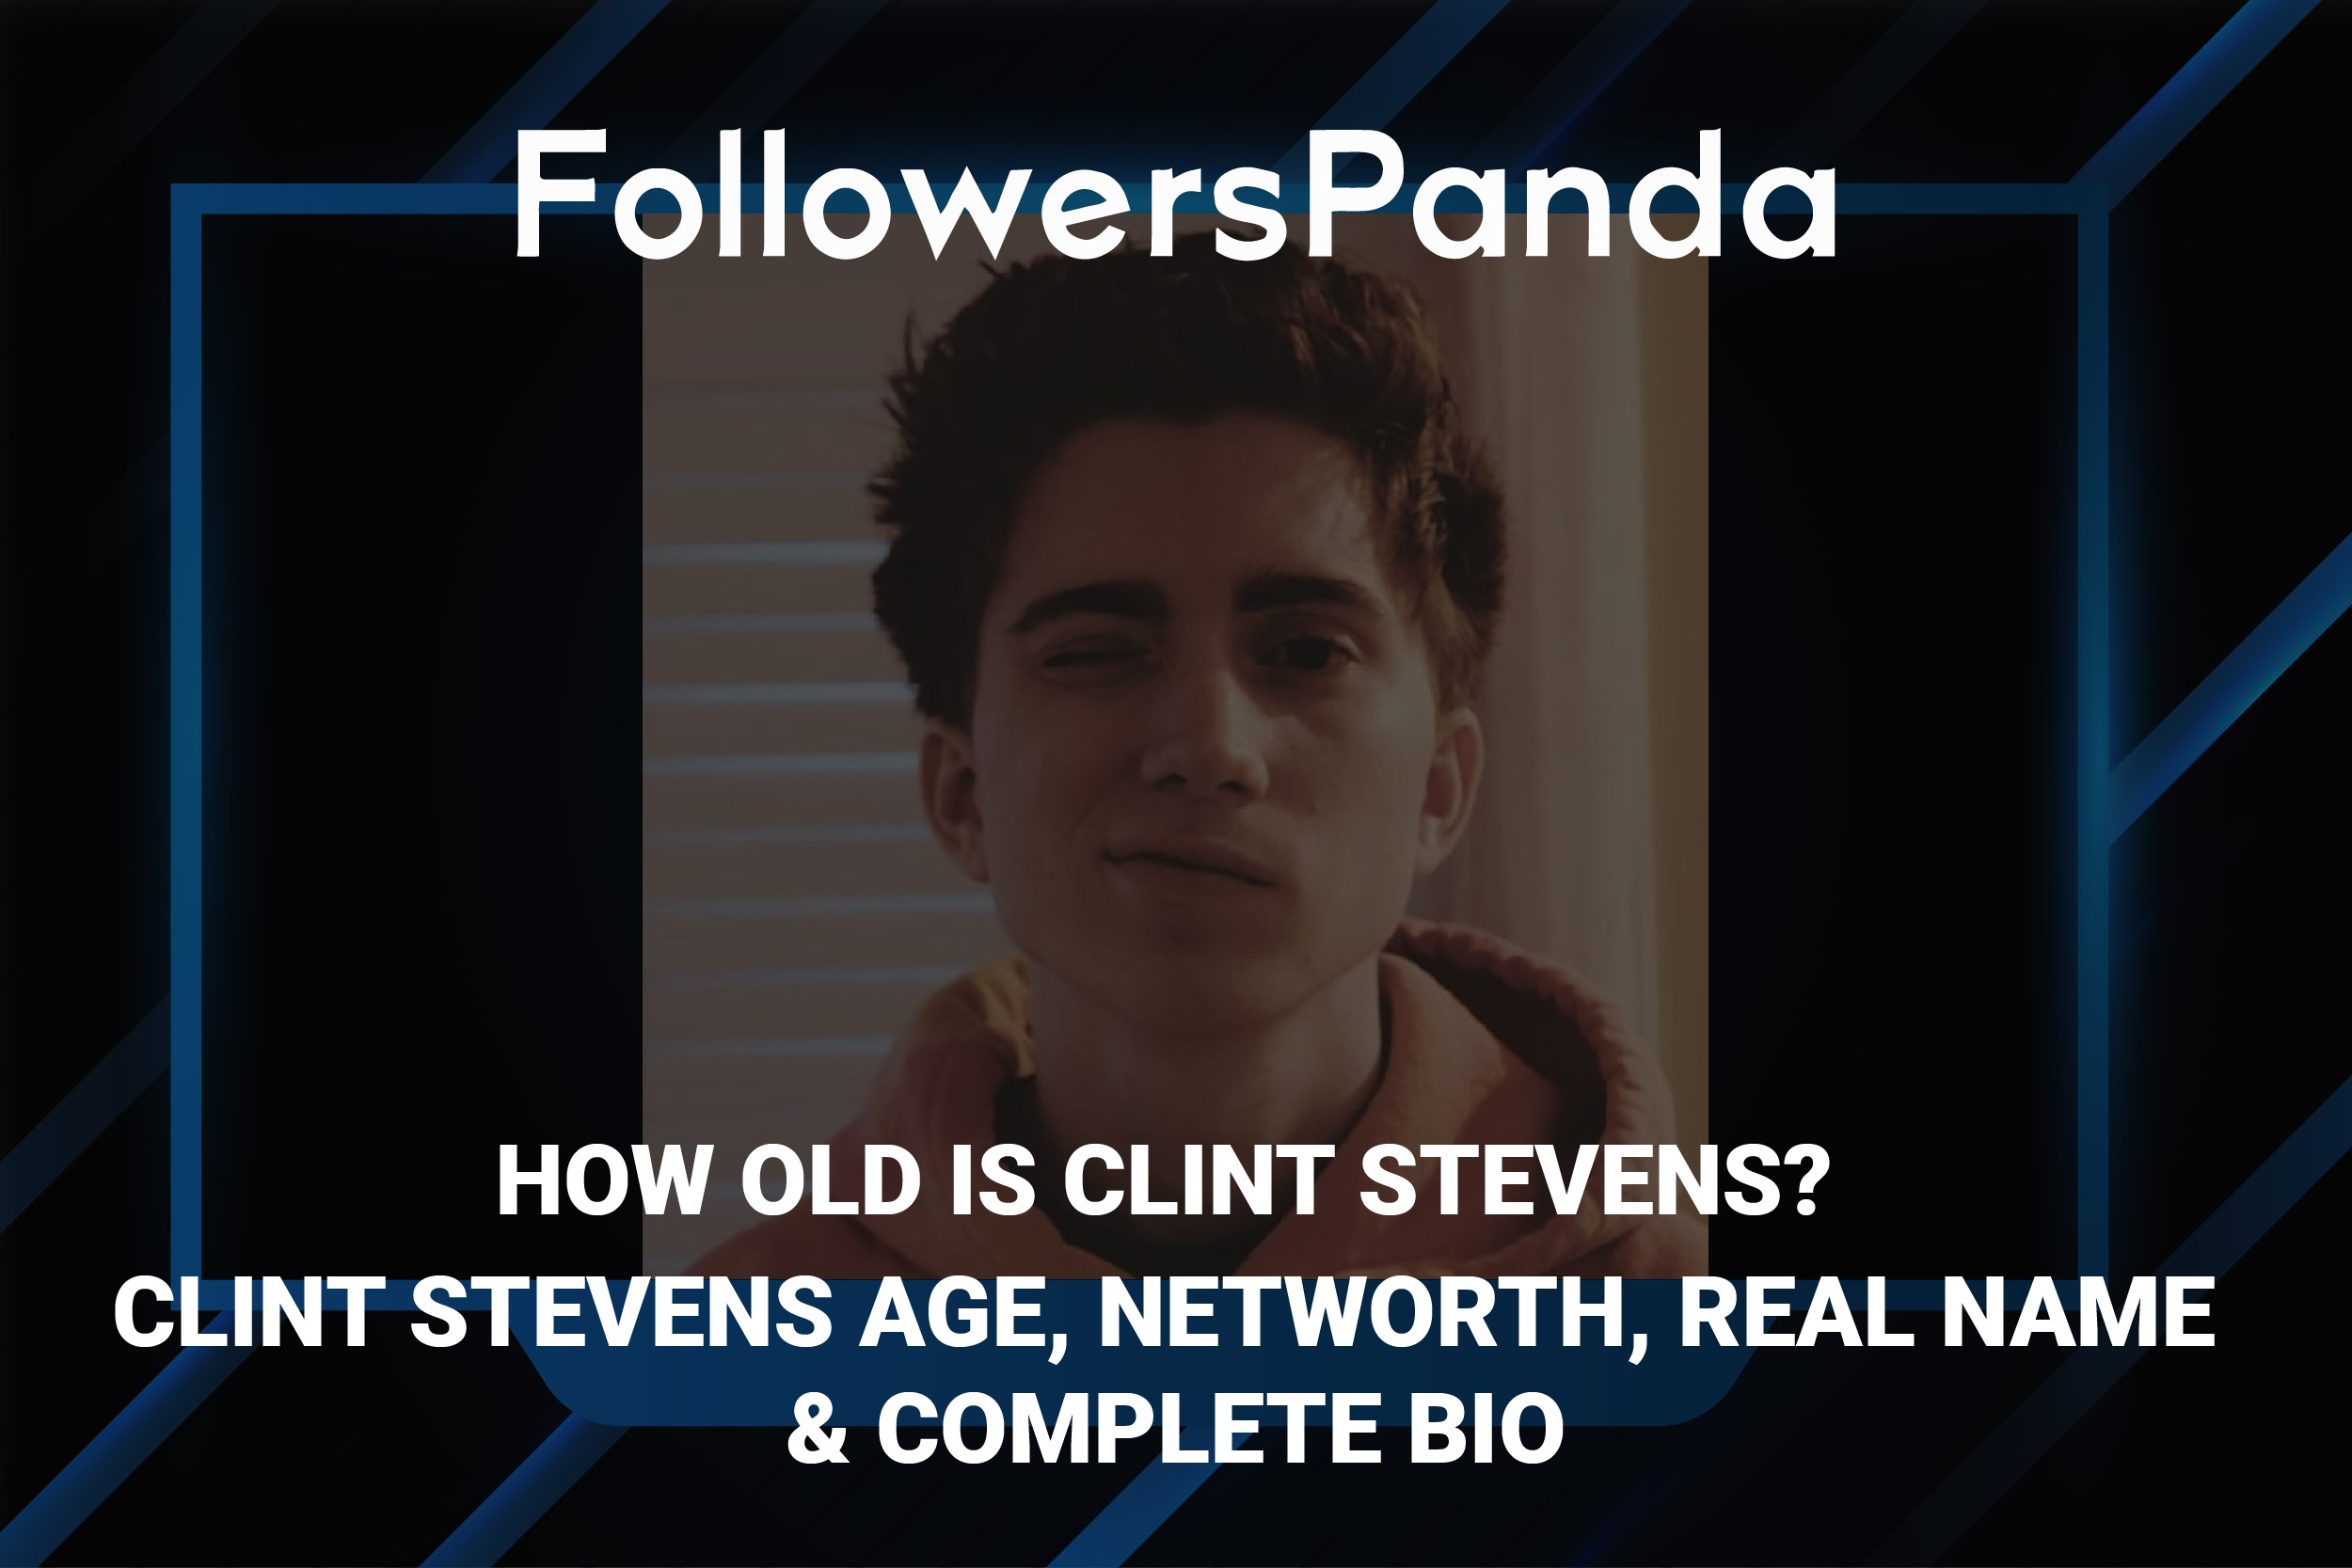 Clint Stevens age